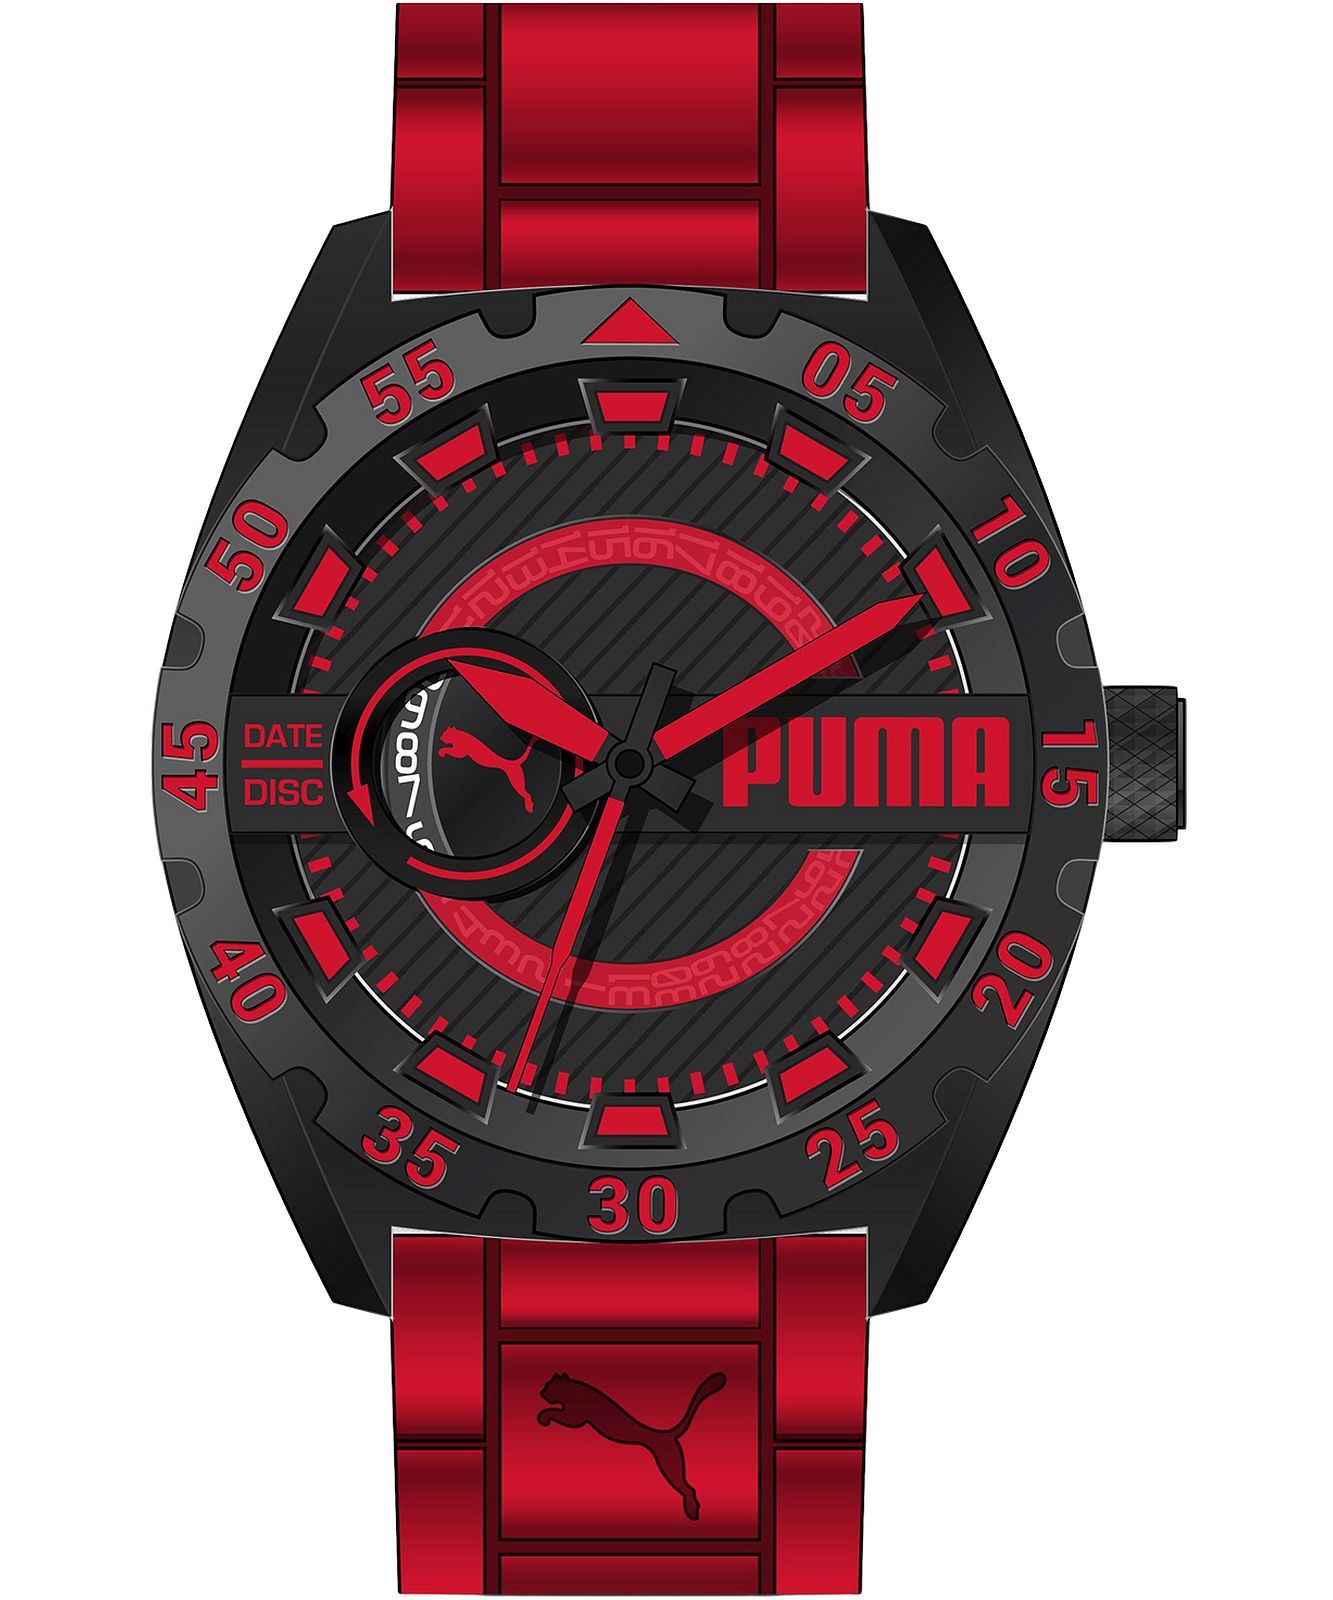 Puma P5113 - Street Watch •